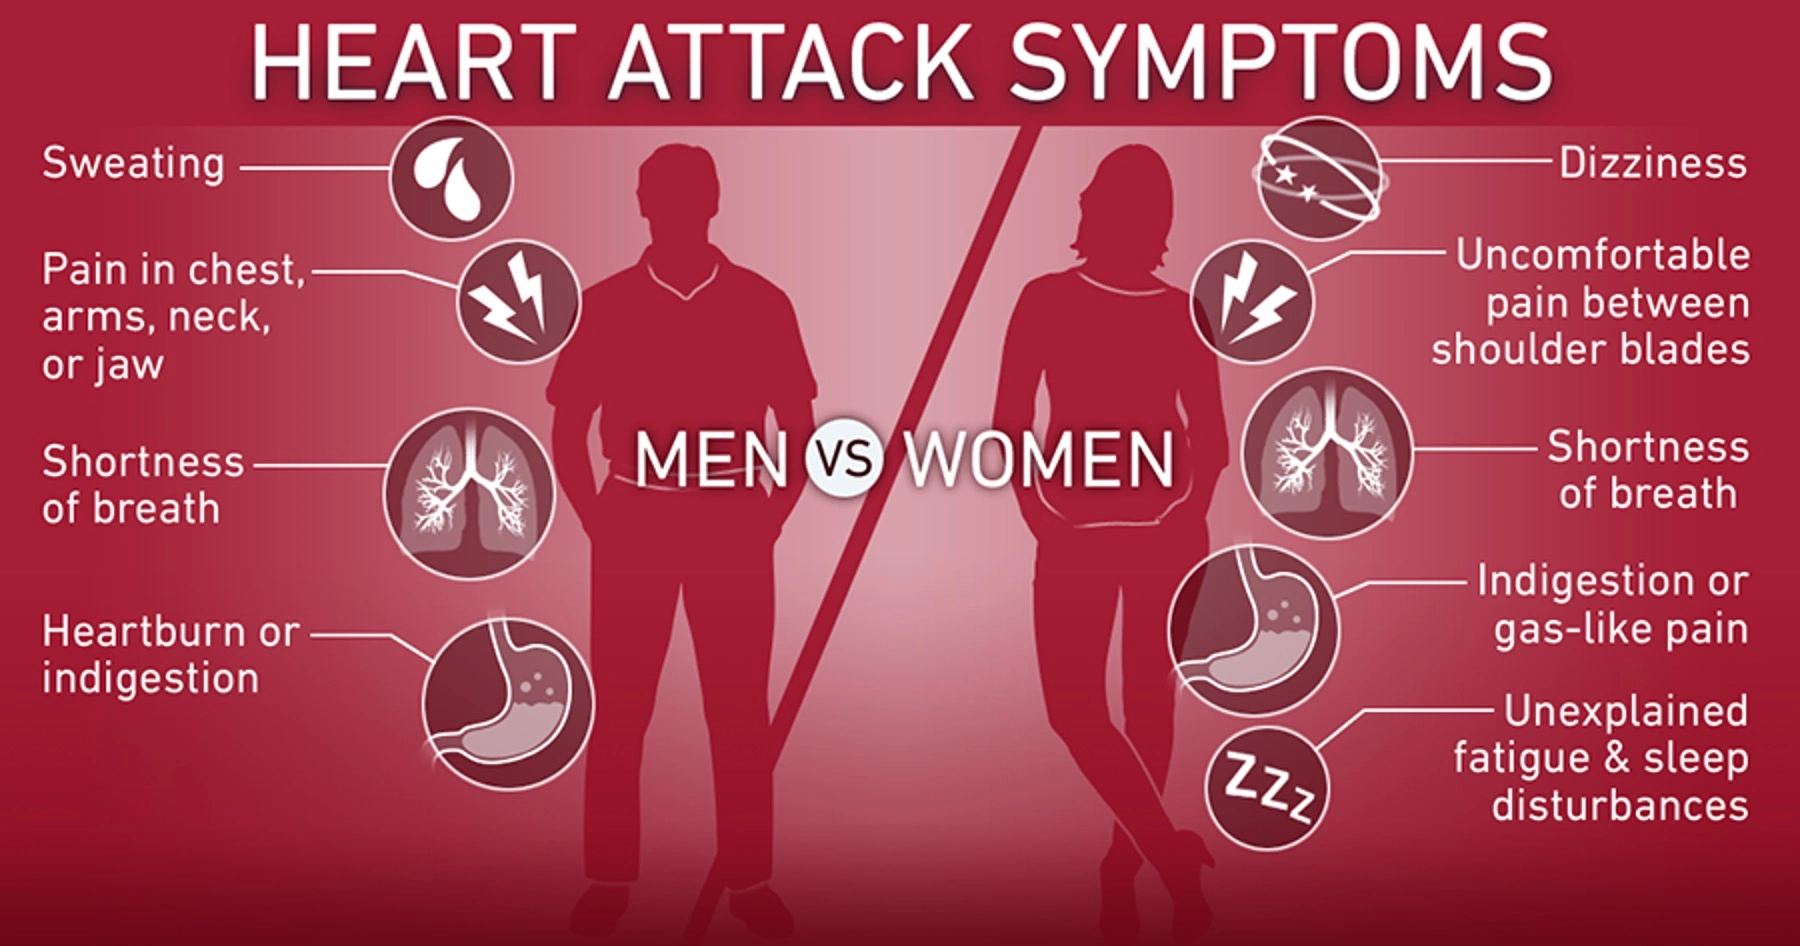 Chart listing the heart attack symptoms of men vs women.